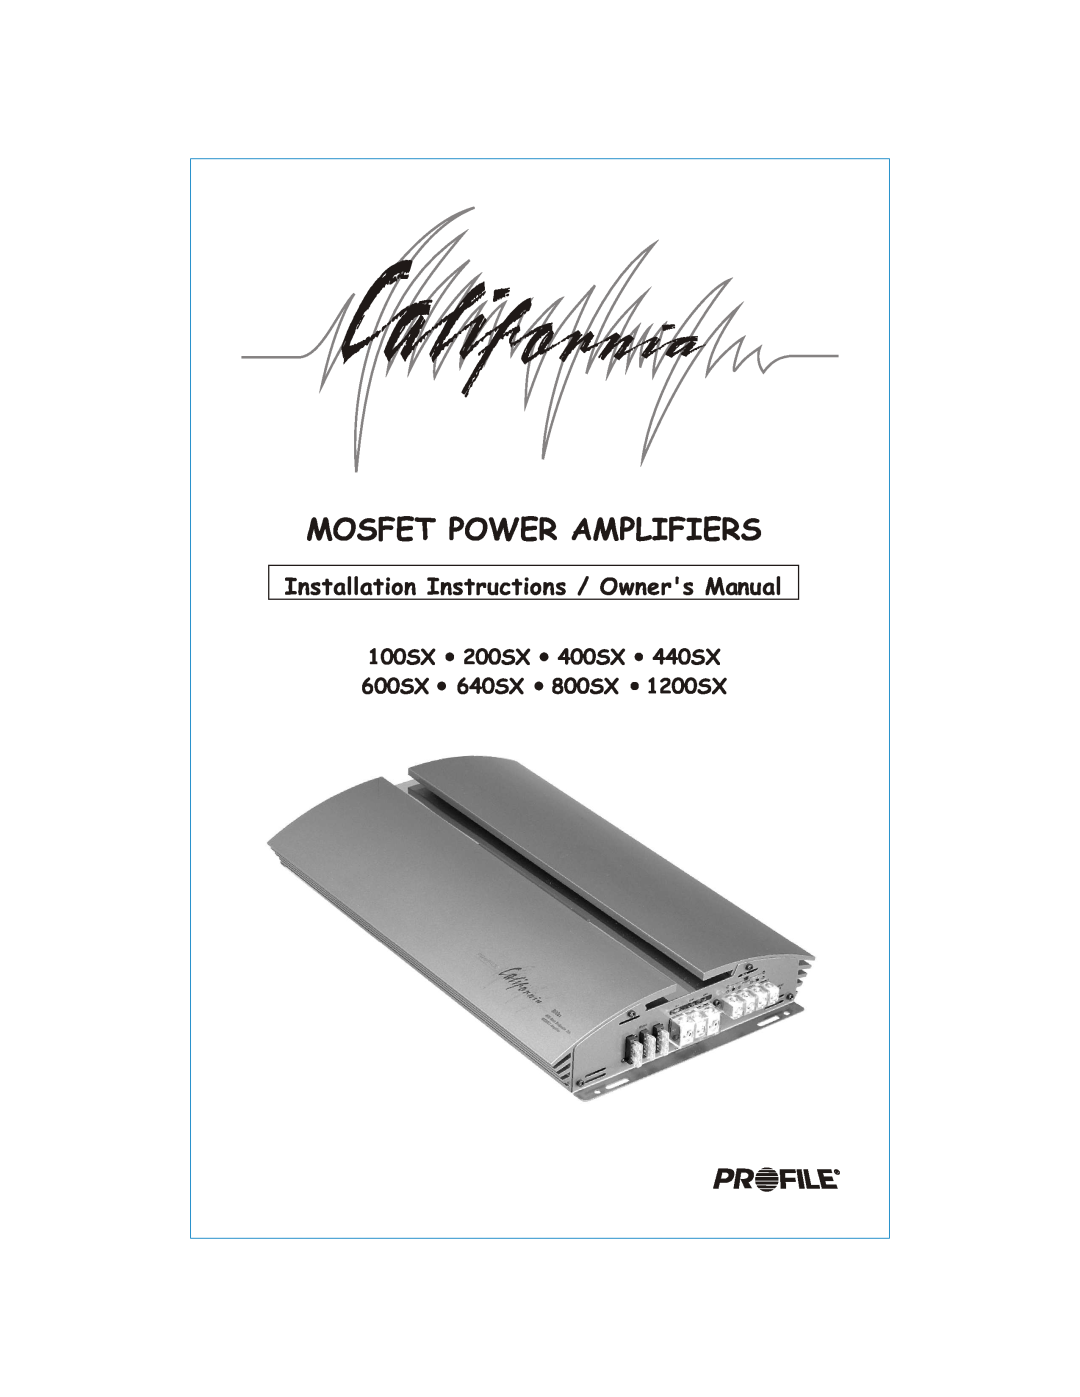 Profile 400SX installation instructions Mosfet Power Amplifiers, 100SX, 600SX, 640SX, 800SX, 440SX, 1200SX 